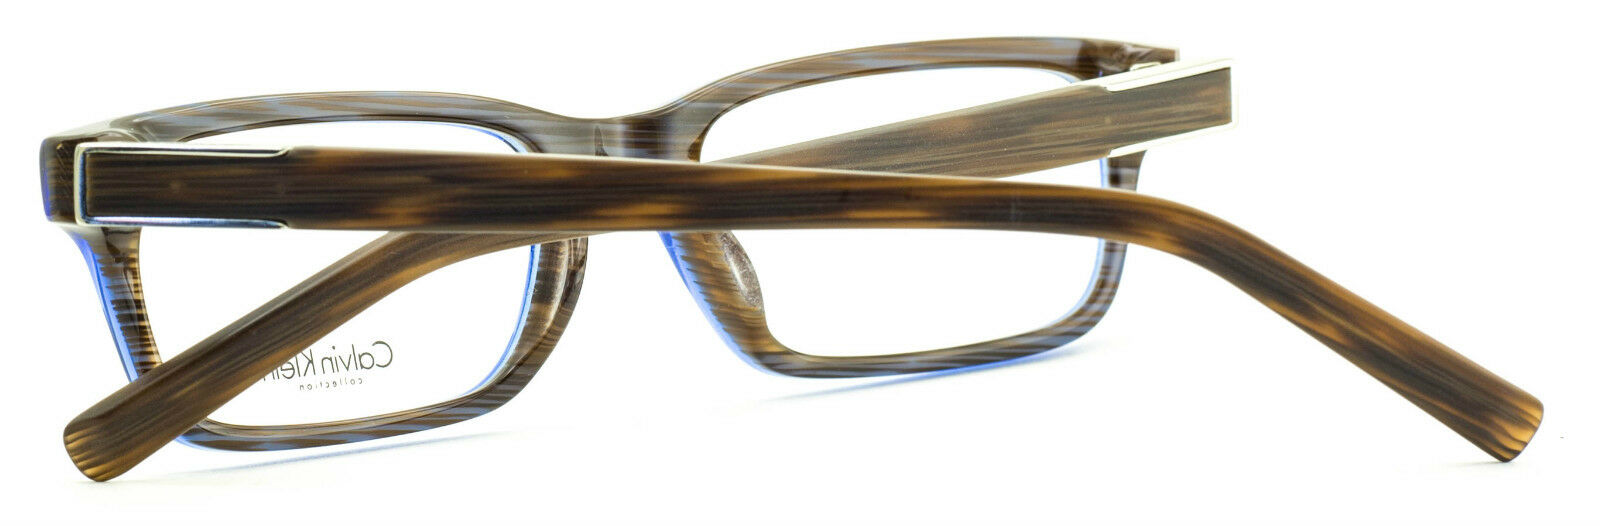 CALVIN KLEIN CK7881 414 Eyewear RX Optical FRAMES Eyeglasses Glasses - New BNIB